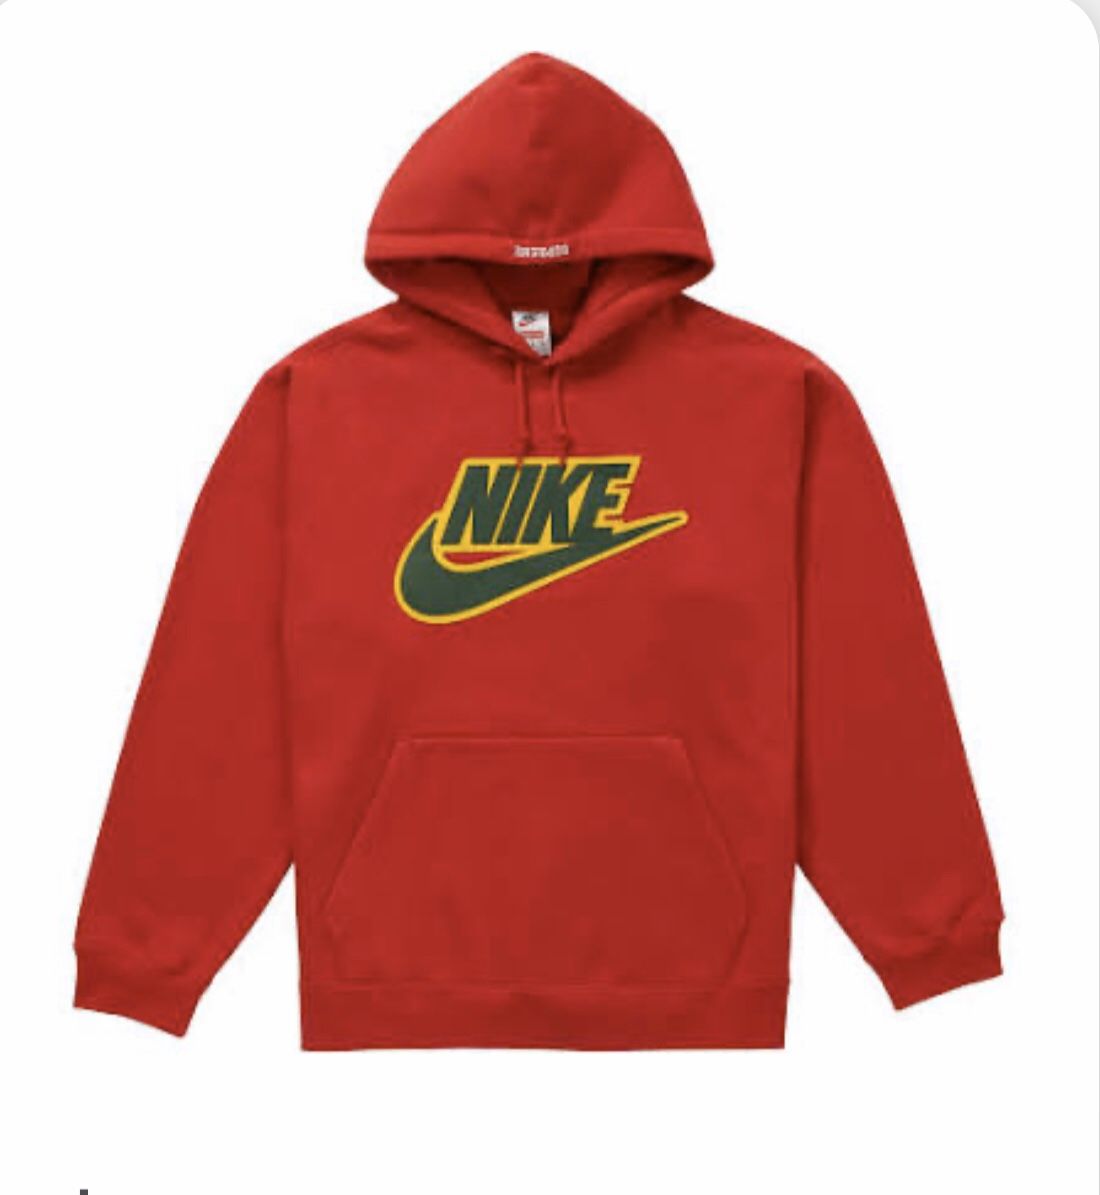 Supreme x Nike Appliqué Hoodie - Red - Medium